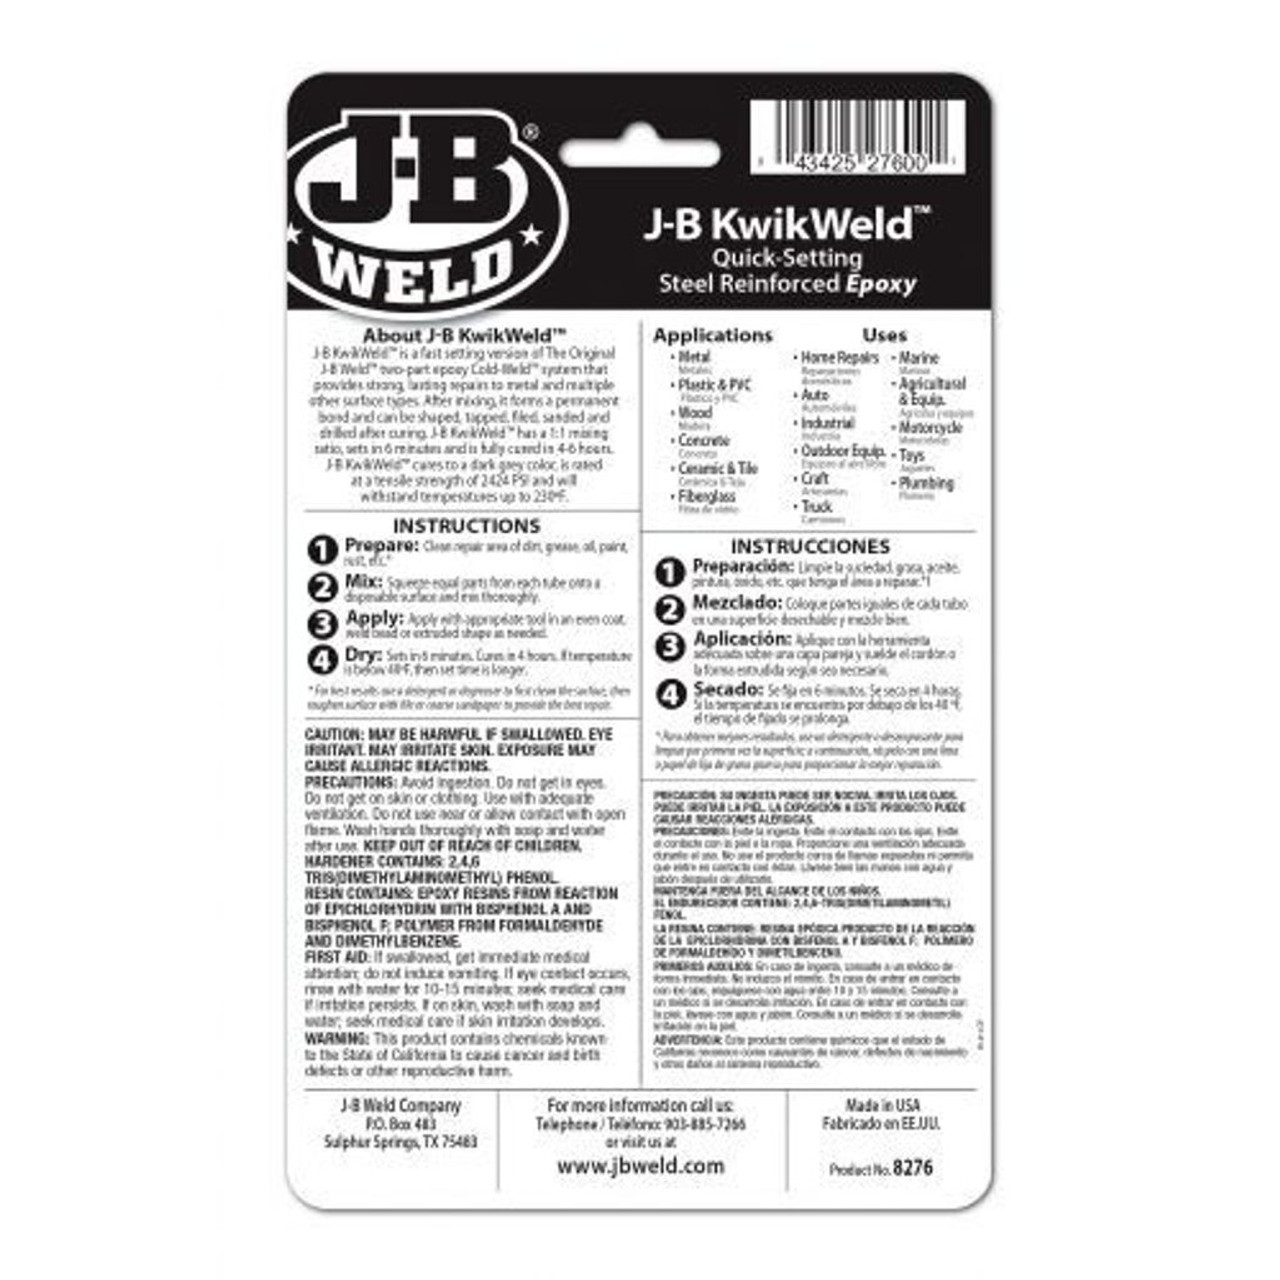 J-B Weld Products